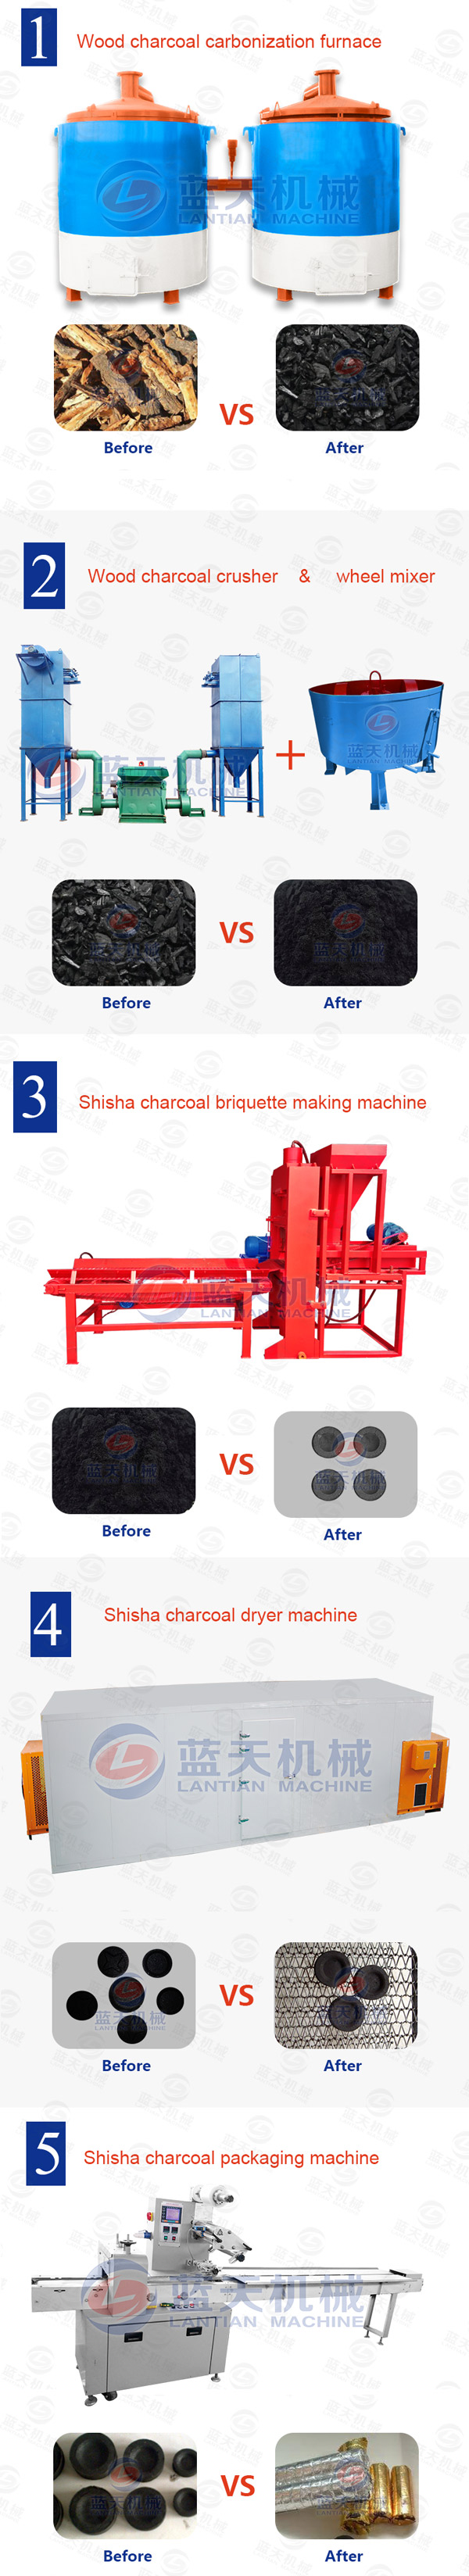 Shisha Charcoal Briquette Making Machine